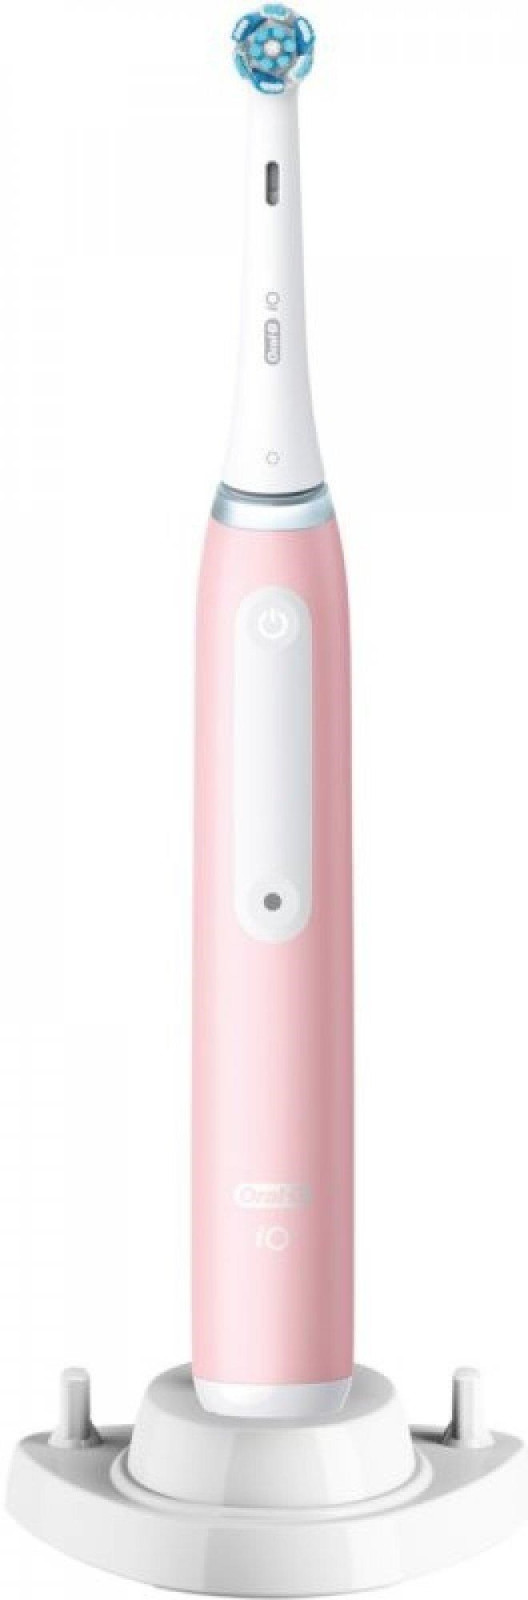 Oral-B iO Series 3 Blush Pink Zubní kartáček